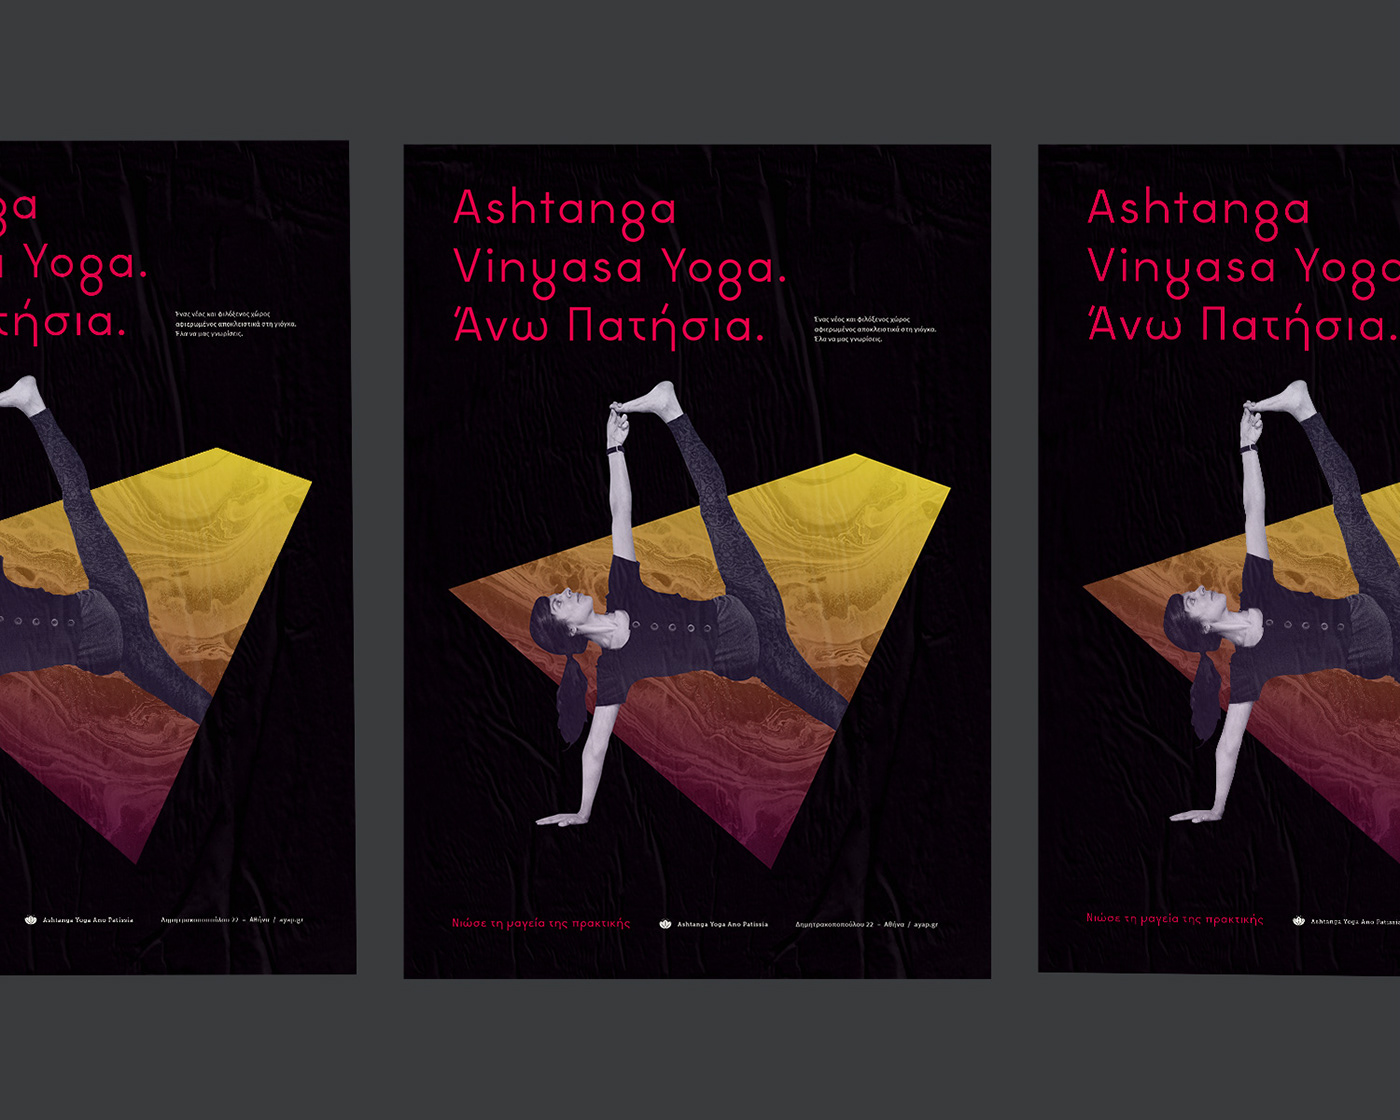 Yoga asana poster shala